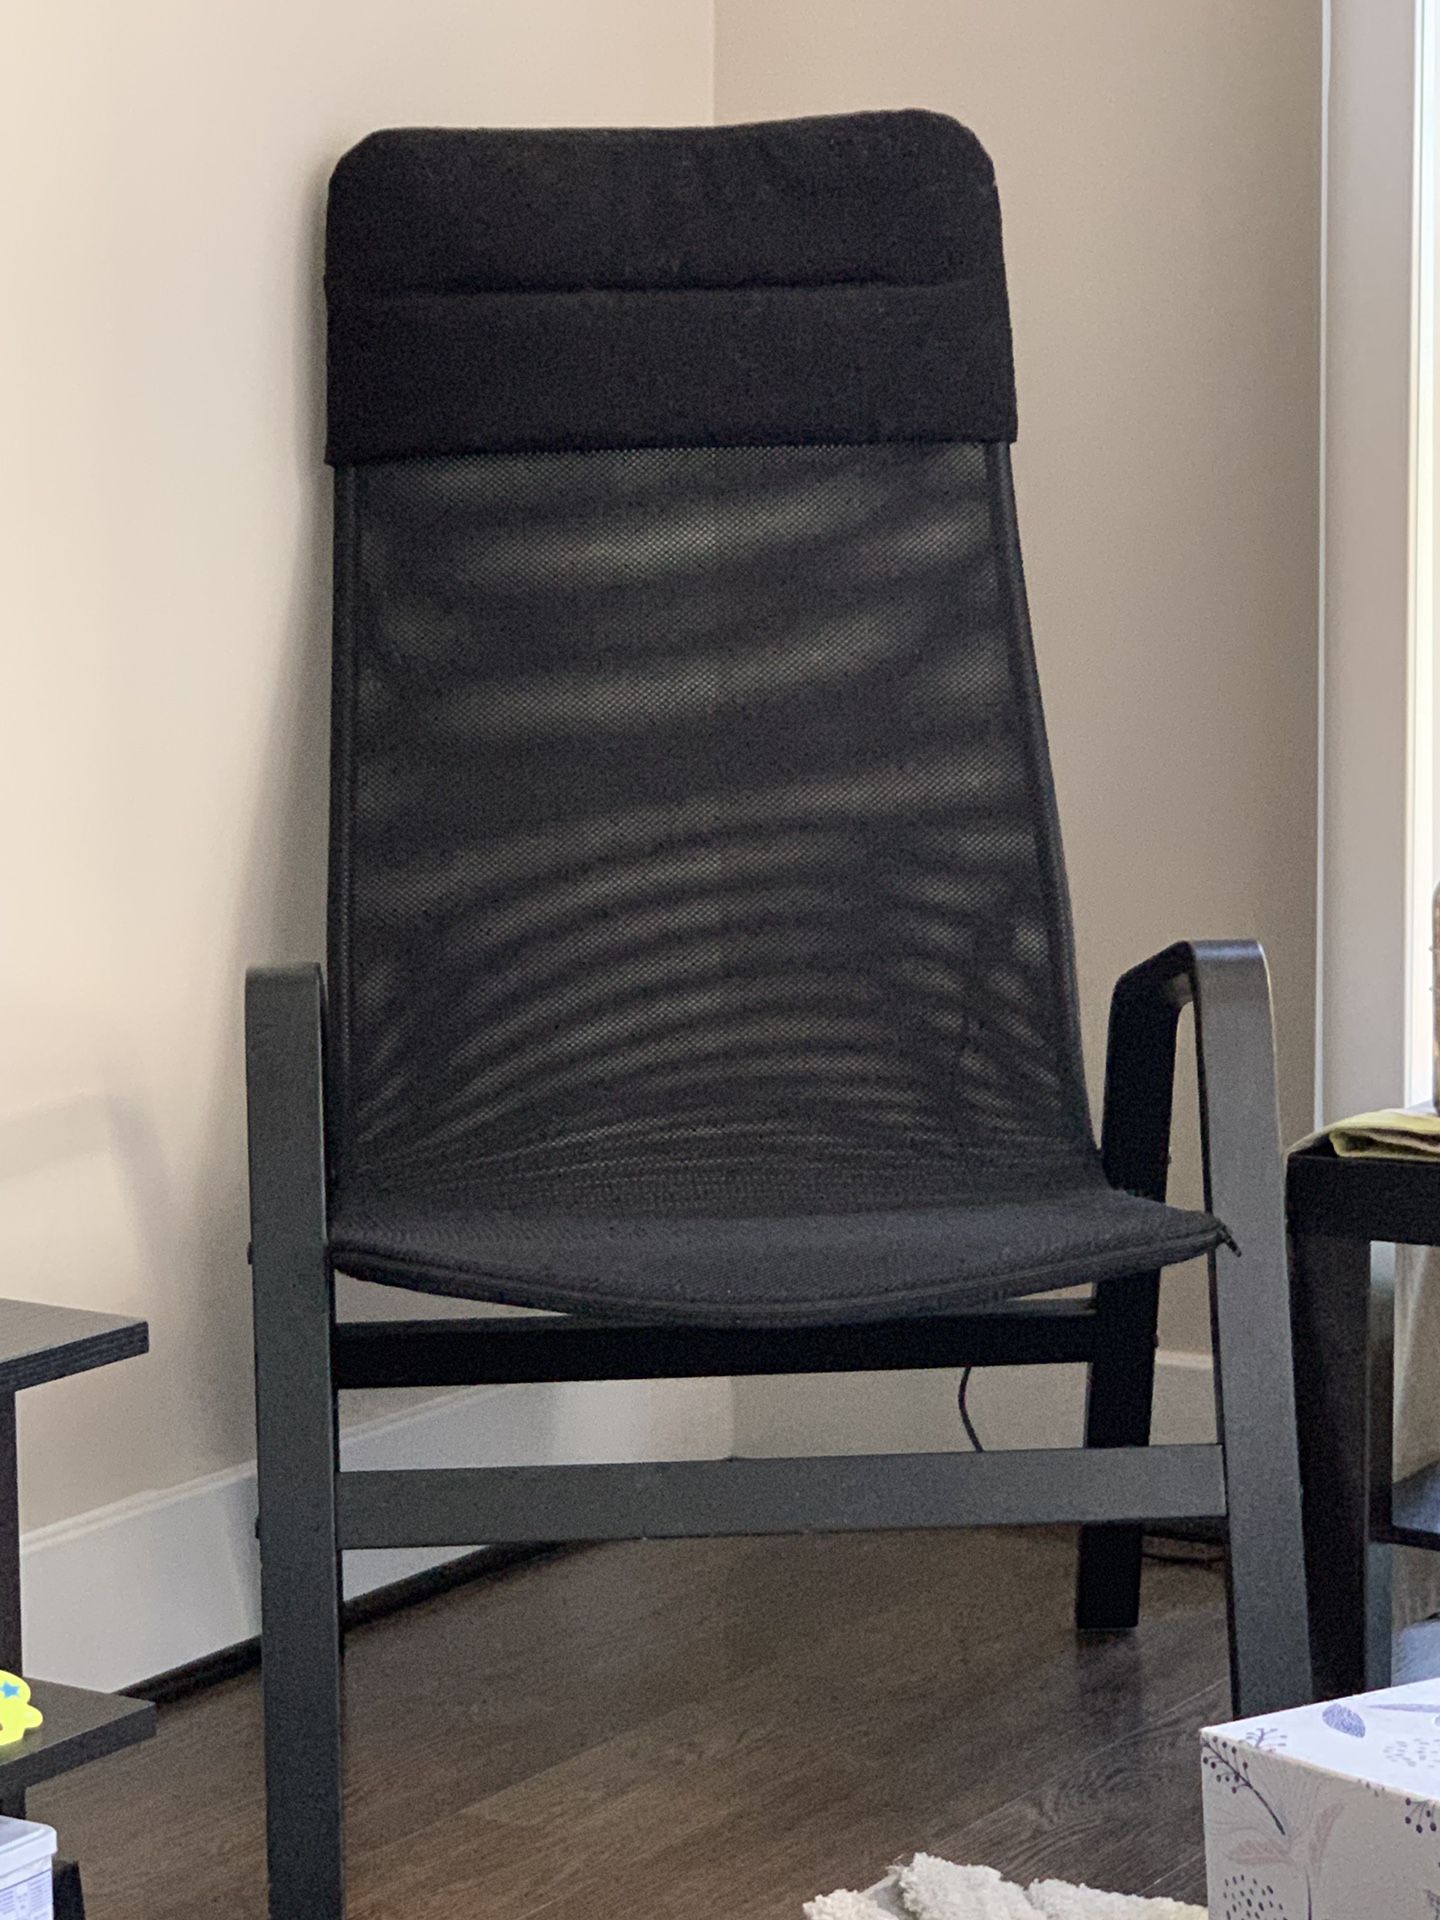 IKEA black chair